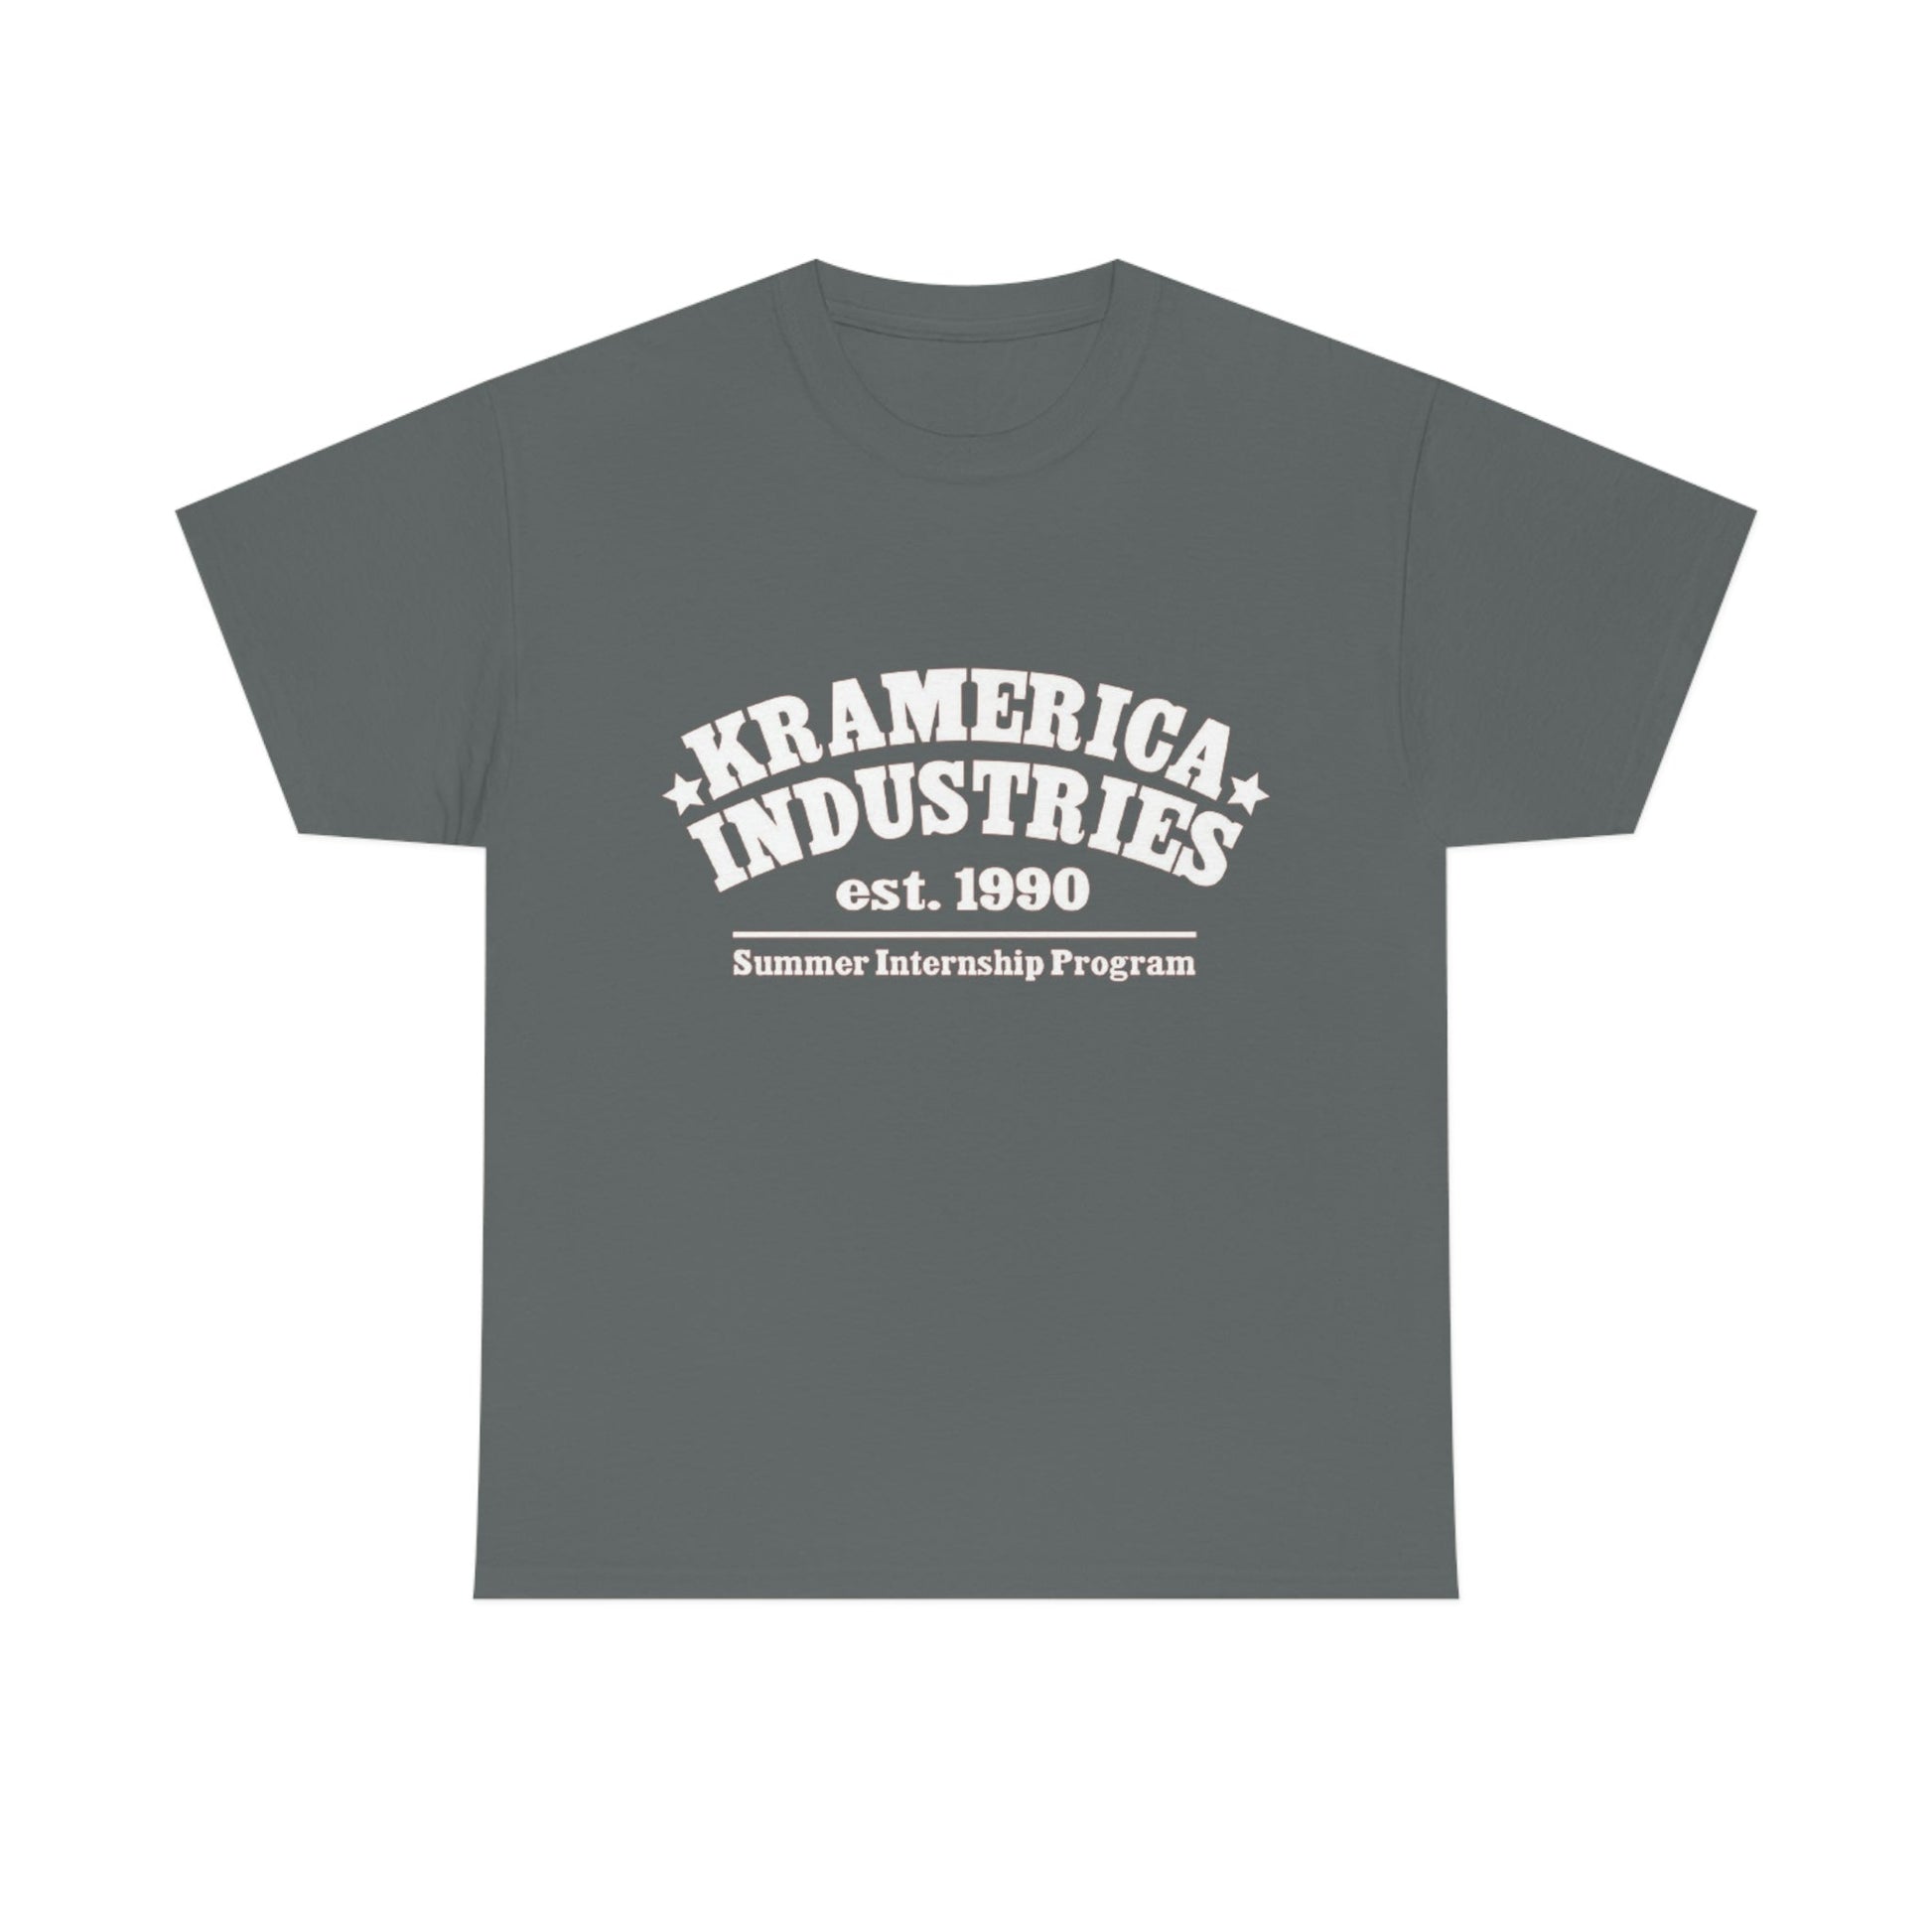 Kramerica Industries Seinfeld T-Shirt - RetroTeeShop